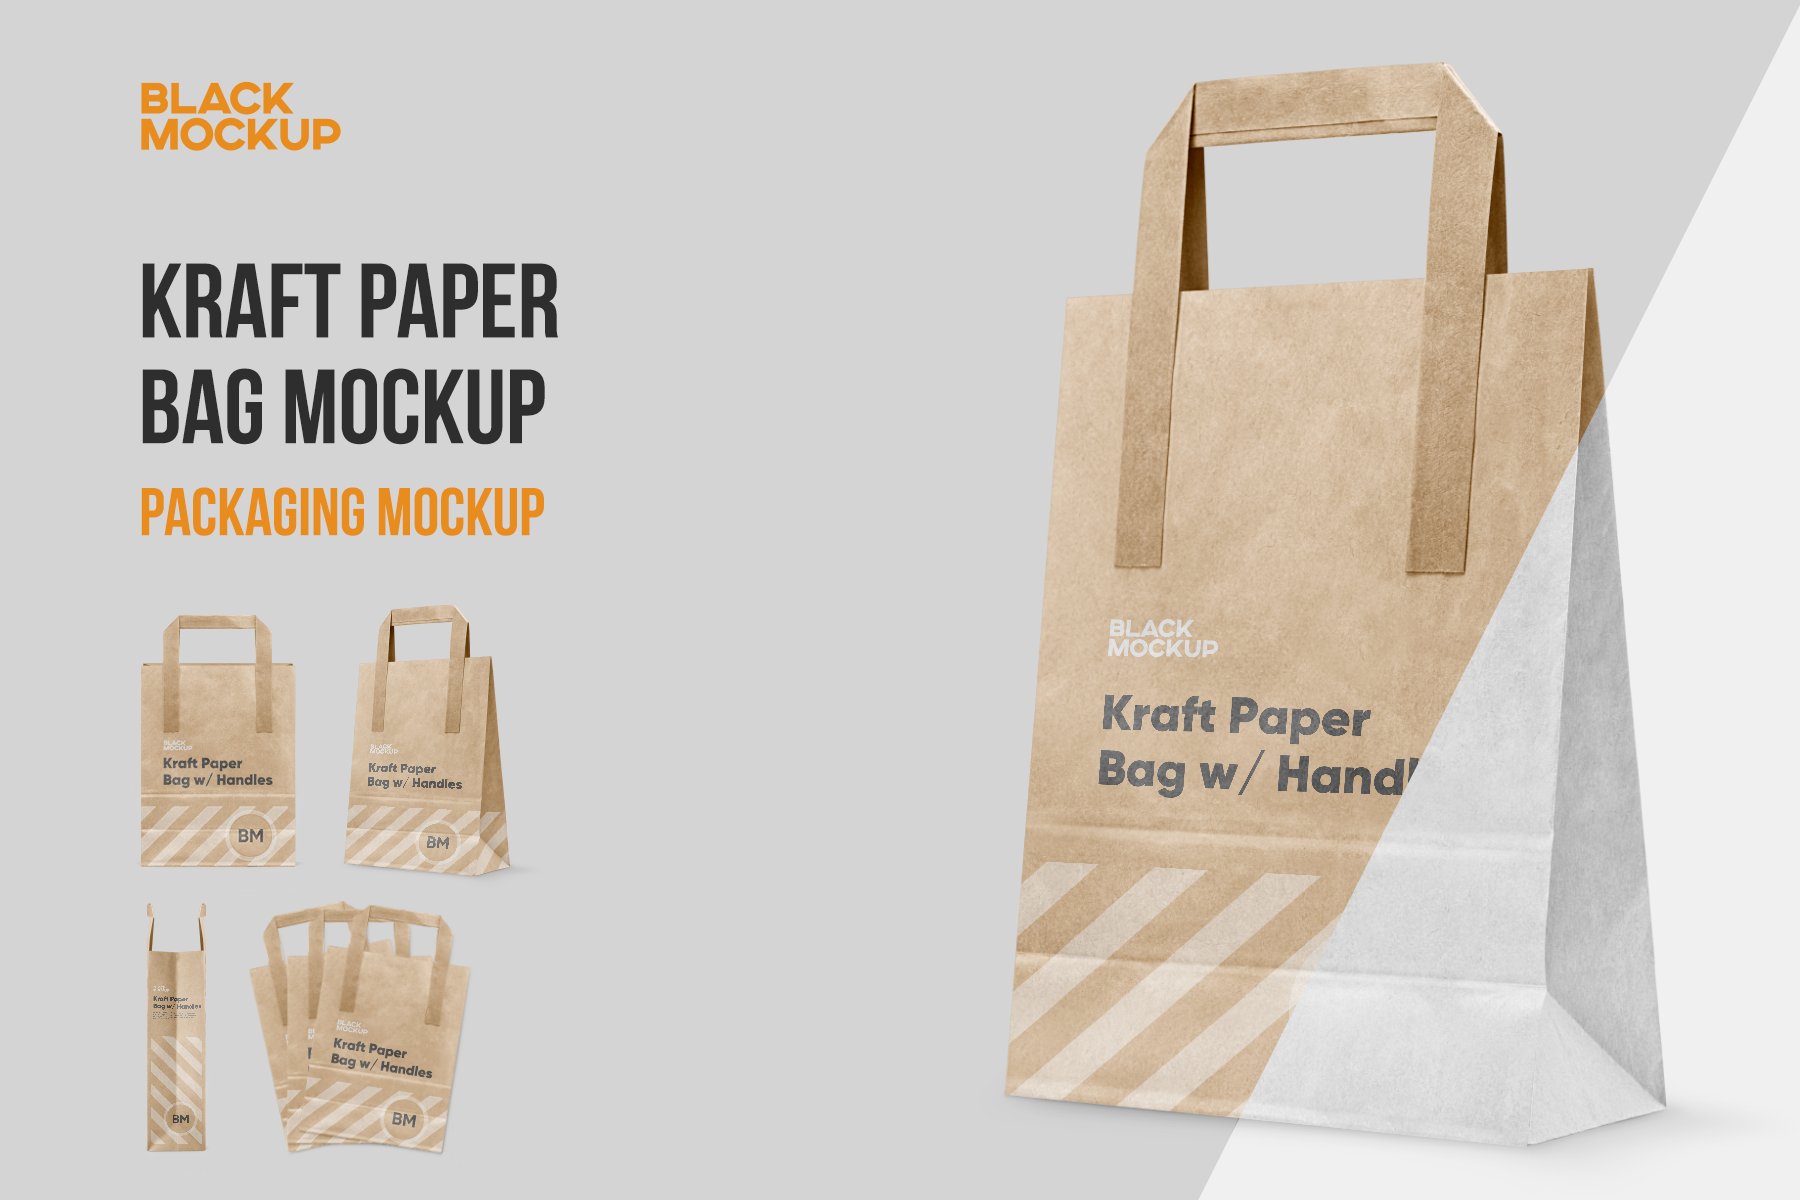 Paper bag mockup cover image.